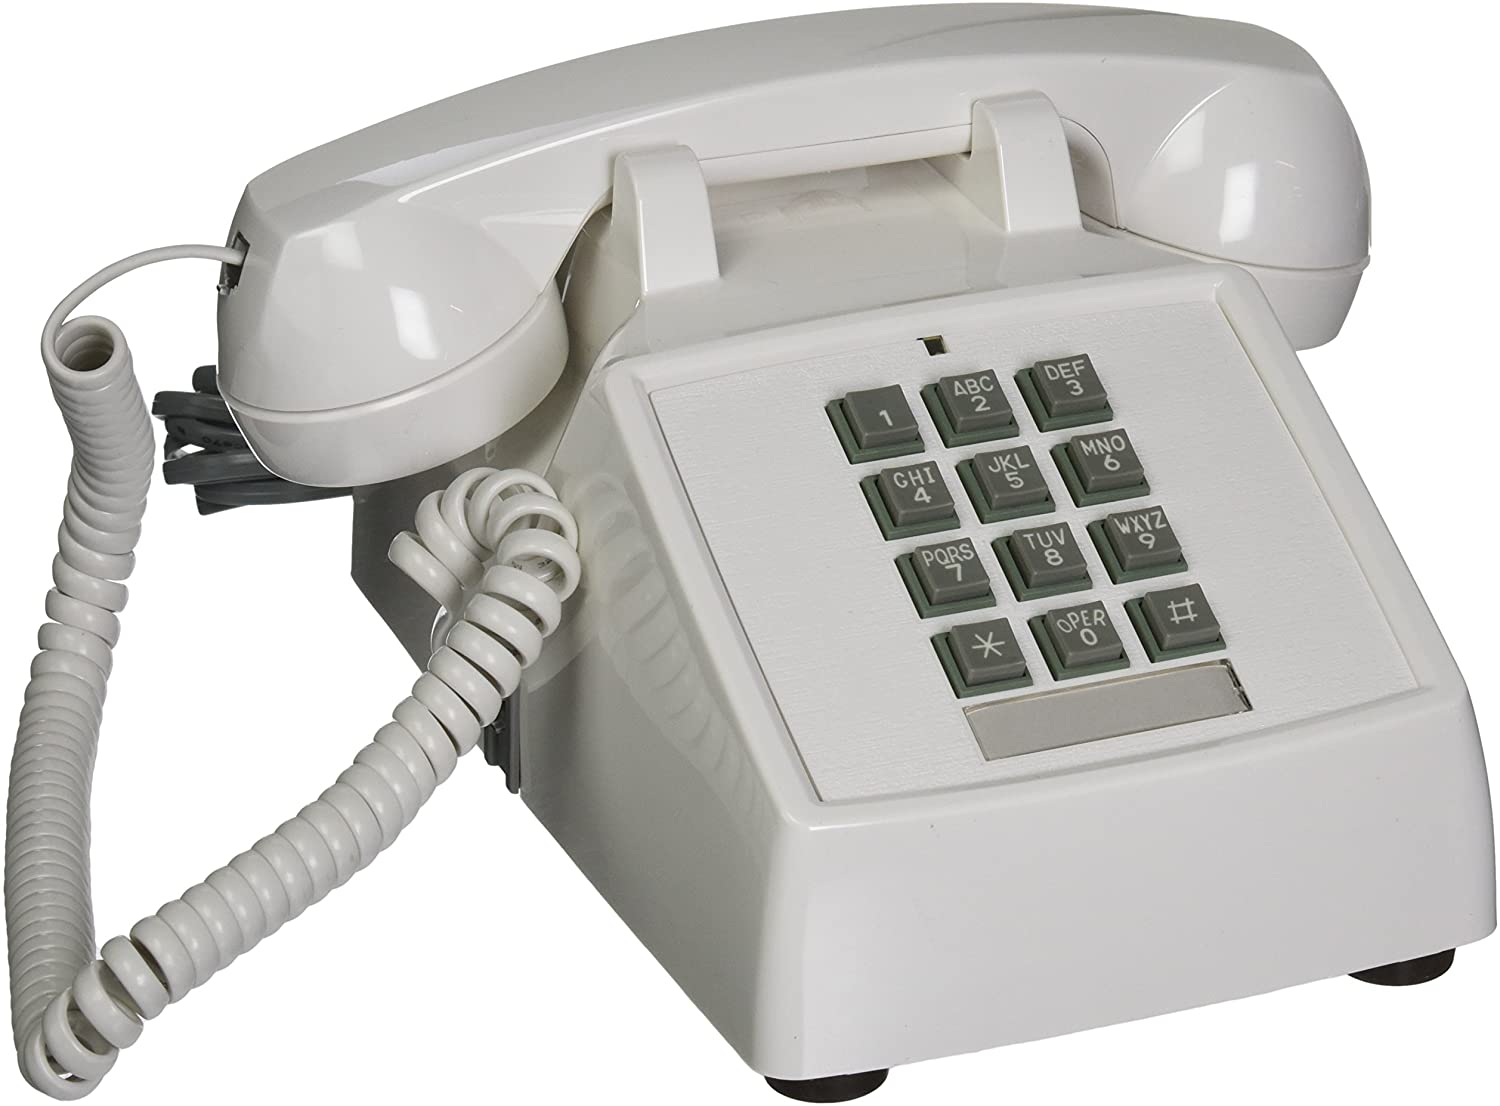 Year 2000 relics - landline telephone - Abc 2 Def 3 Mno Jkl 6 Chi 4 Wxyz 9 Tuv 8 Pqrs # Oper 0